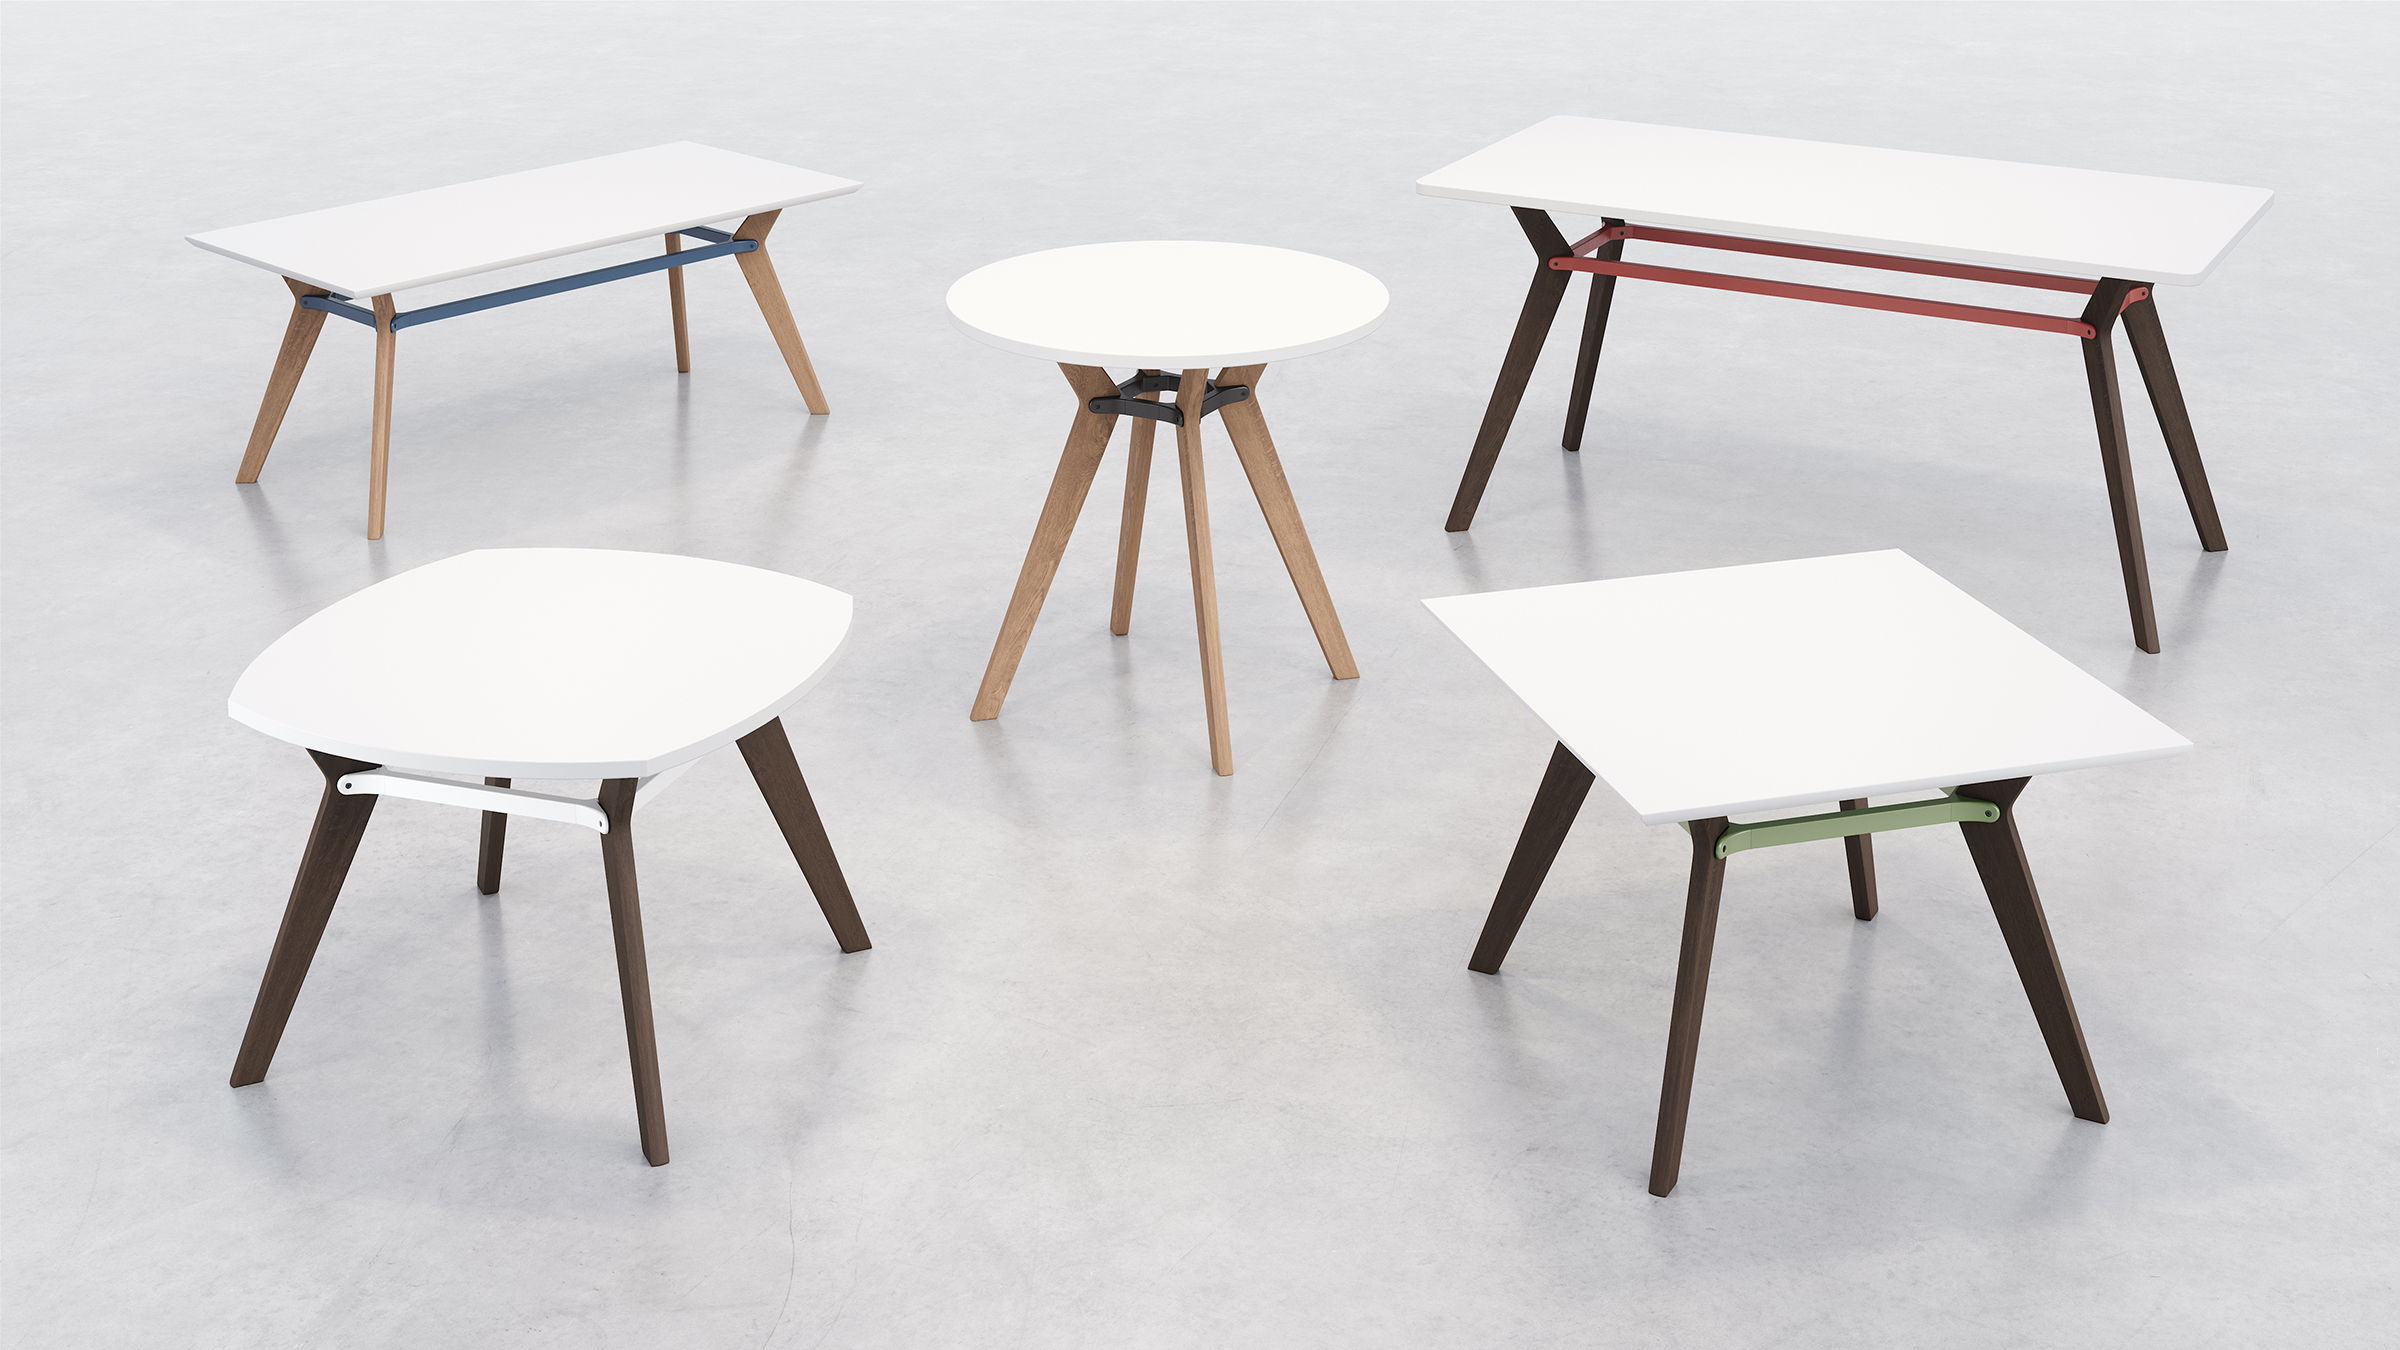 KFI + Q Design = the Rang Range of Tables